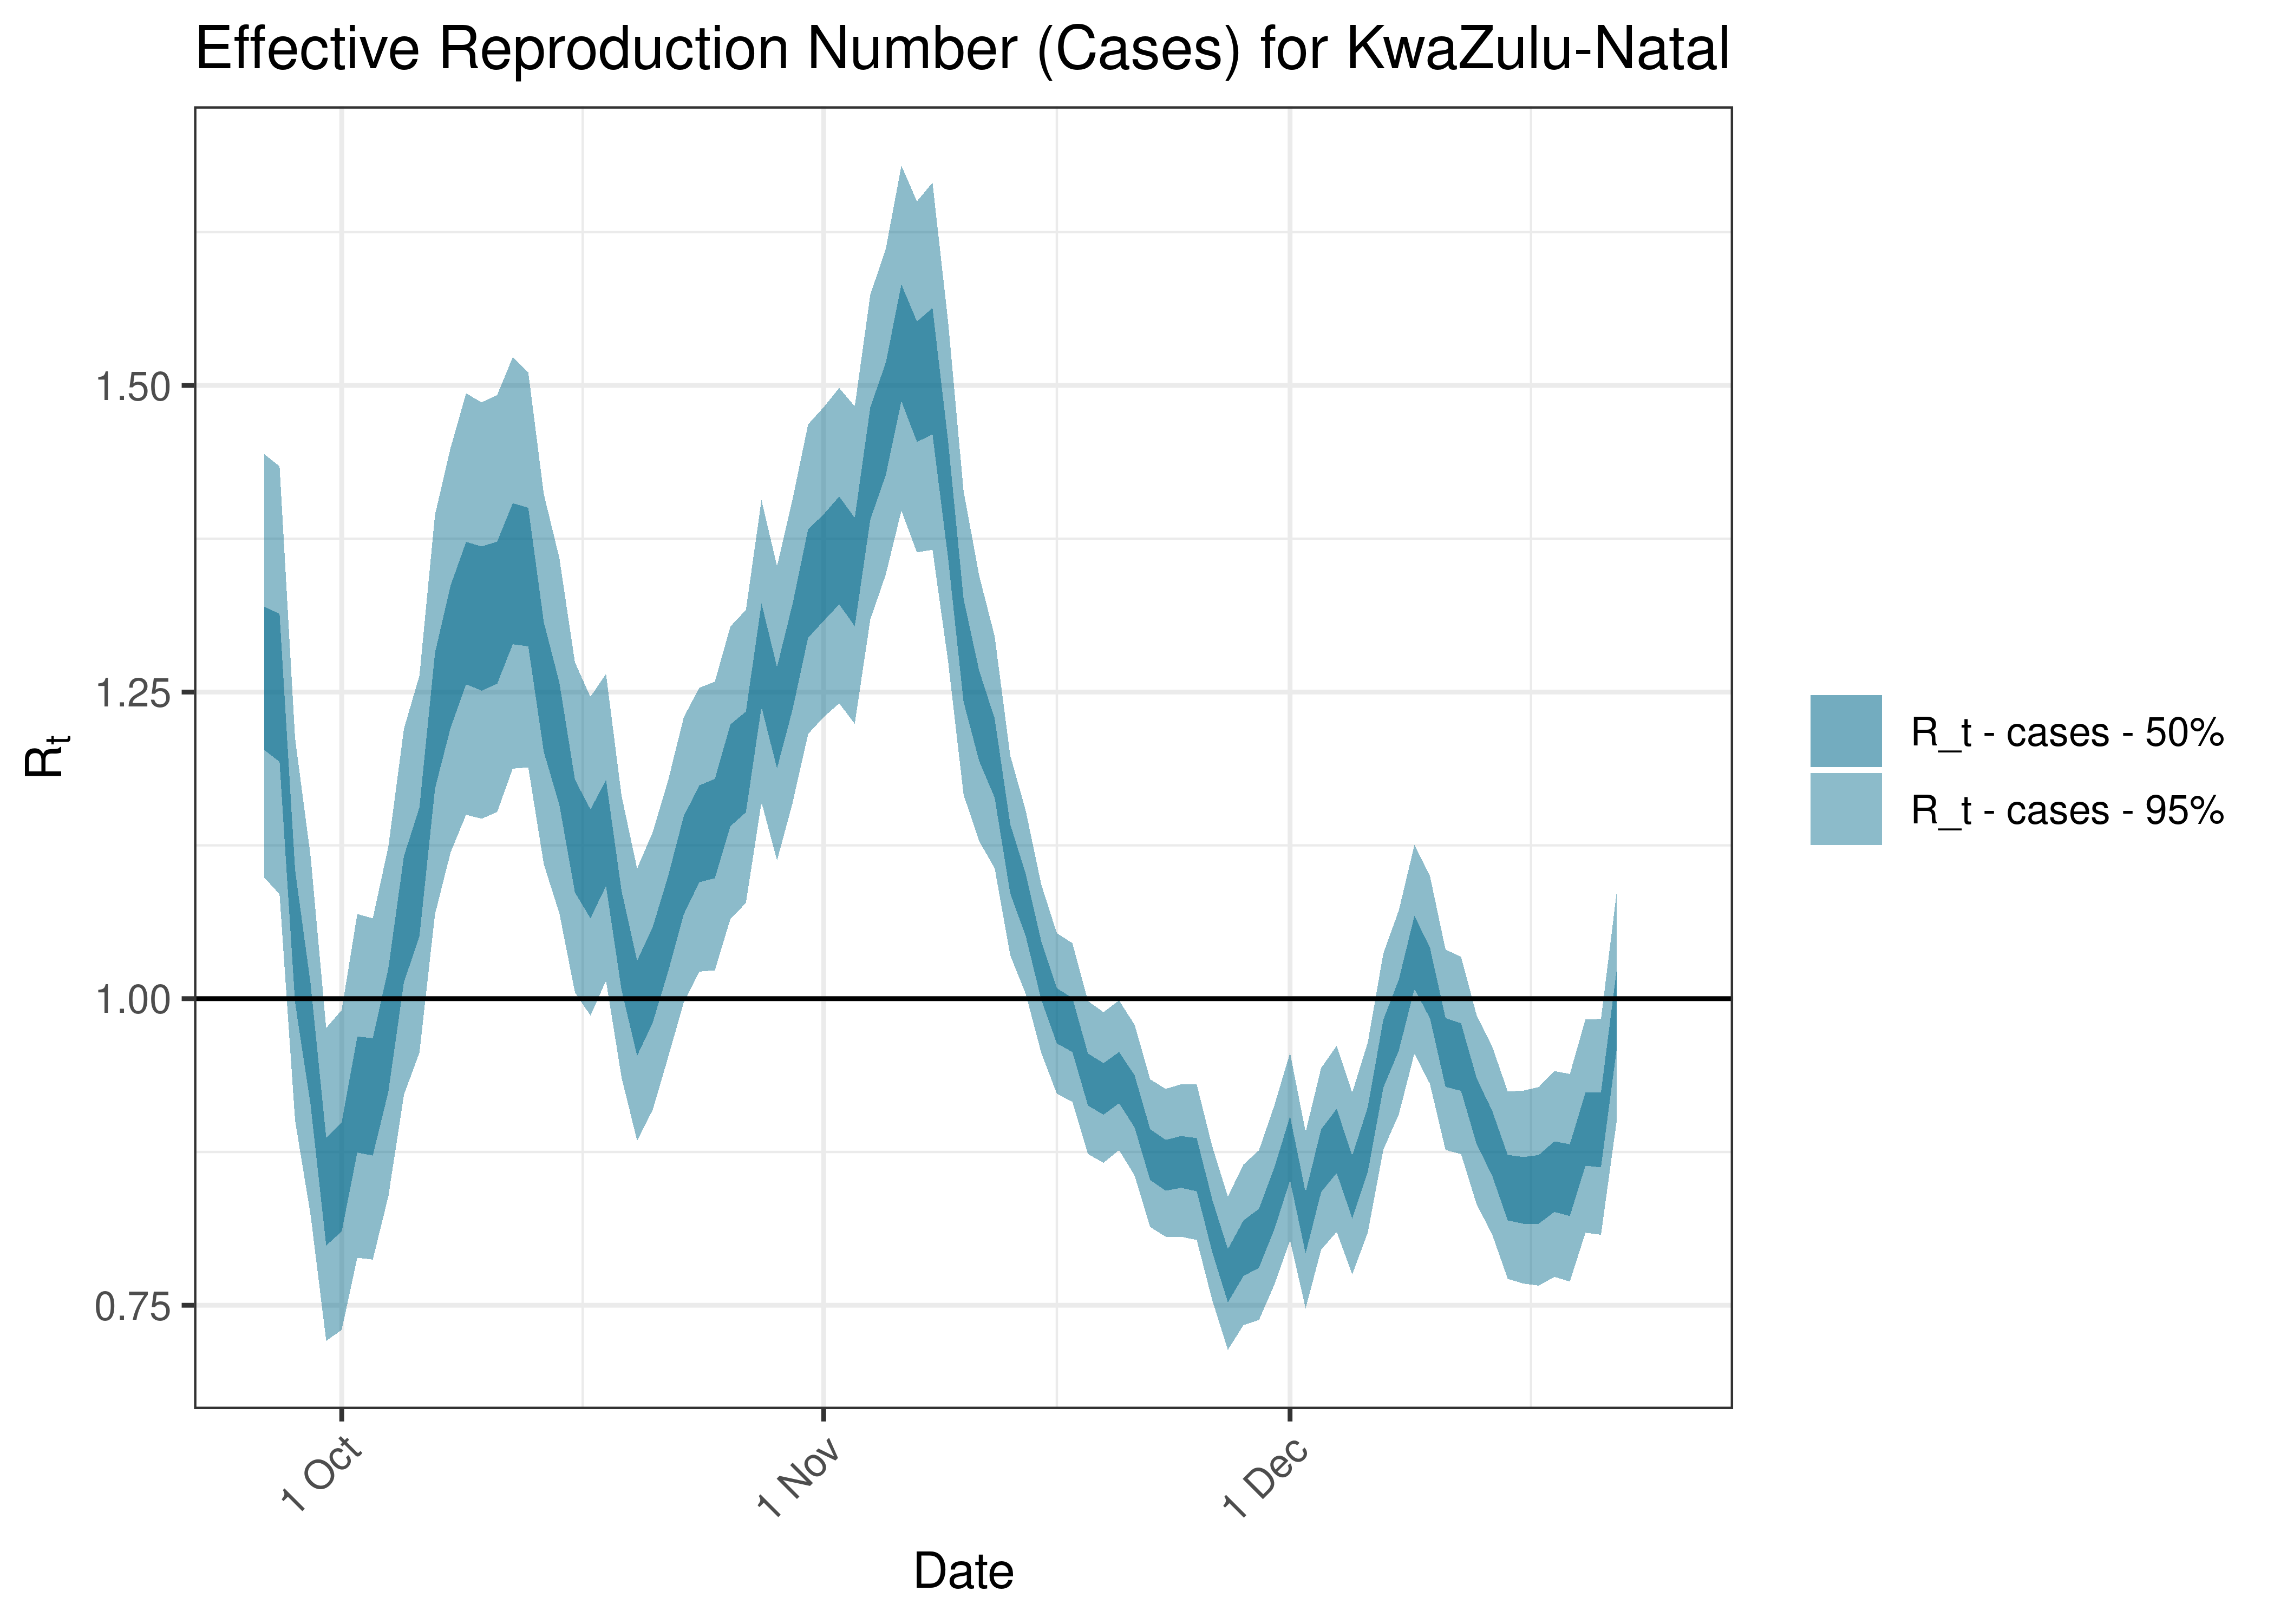 Estimated Effective Reproduction Number Based on Cases for KwaZulu-Natal over last 90 days